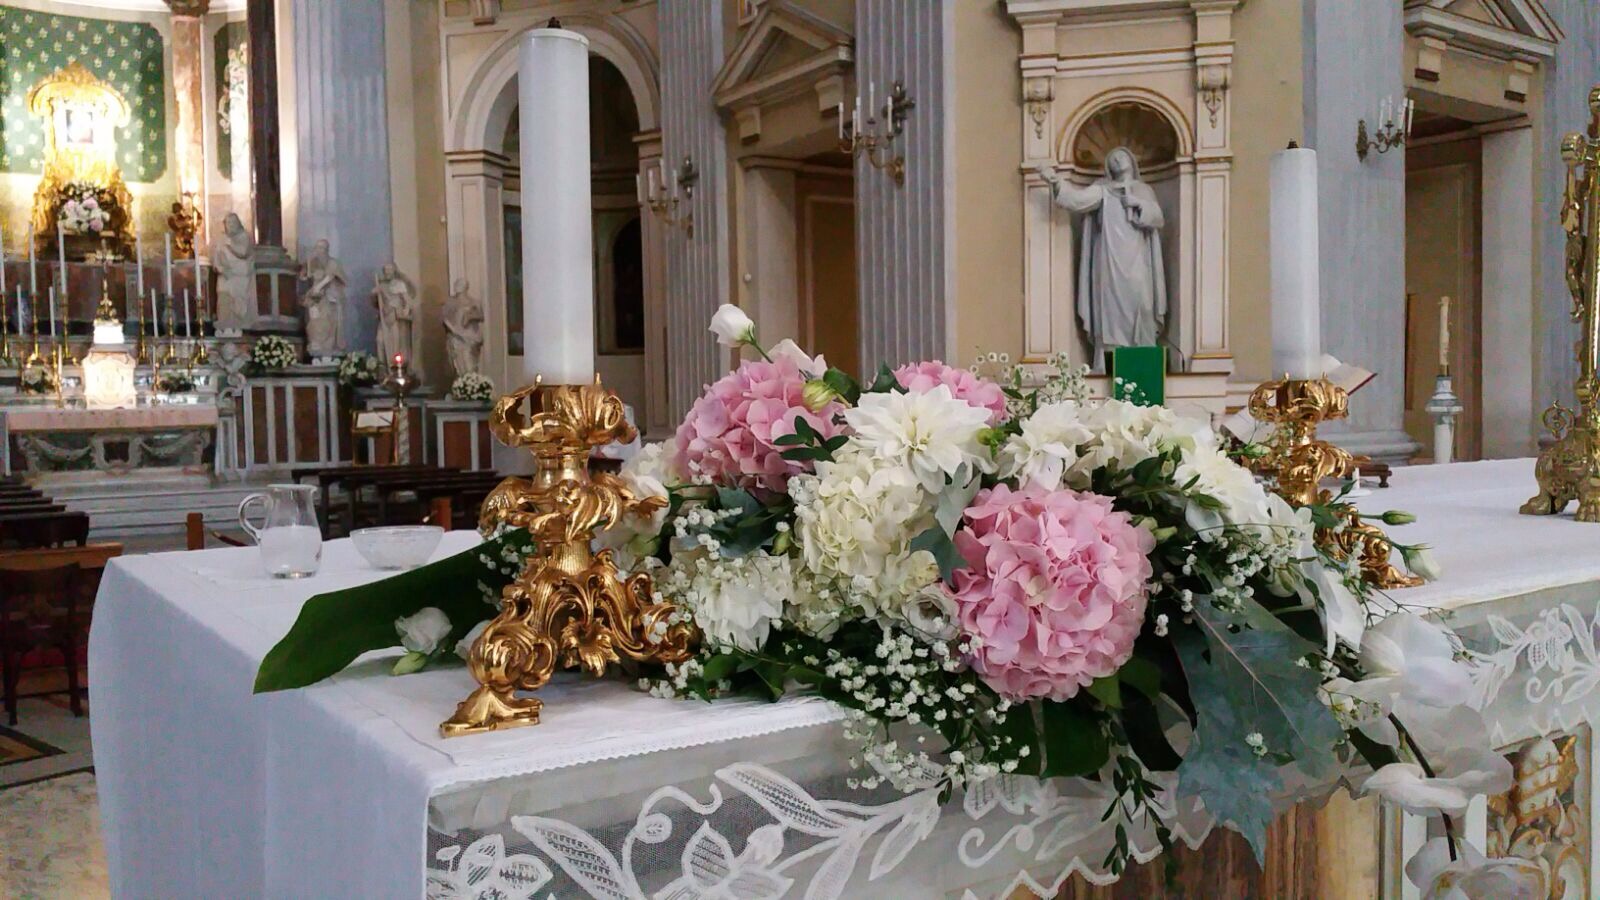 https://www.weddingamalfi.com/wp-content/uploads/Domenico-and-Maria-Wedding-Amalfi-church-flowers-decoration.jpg